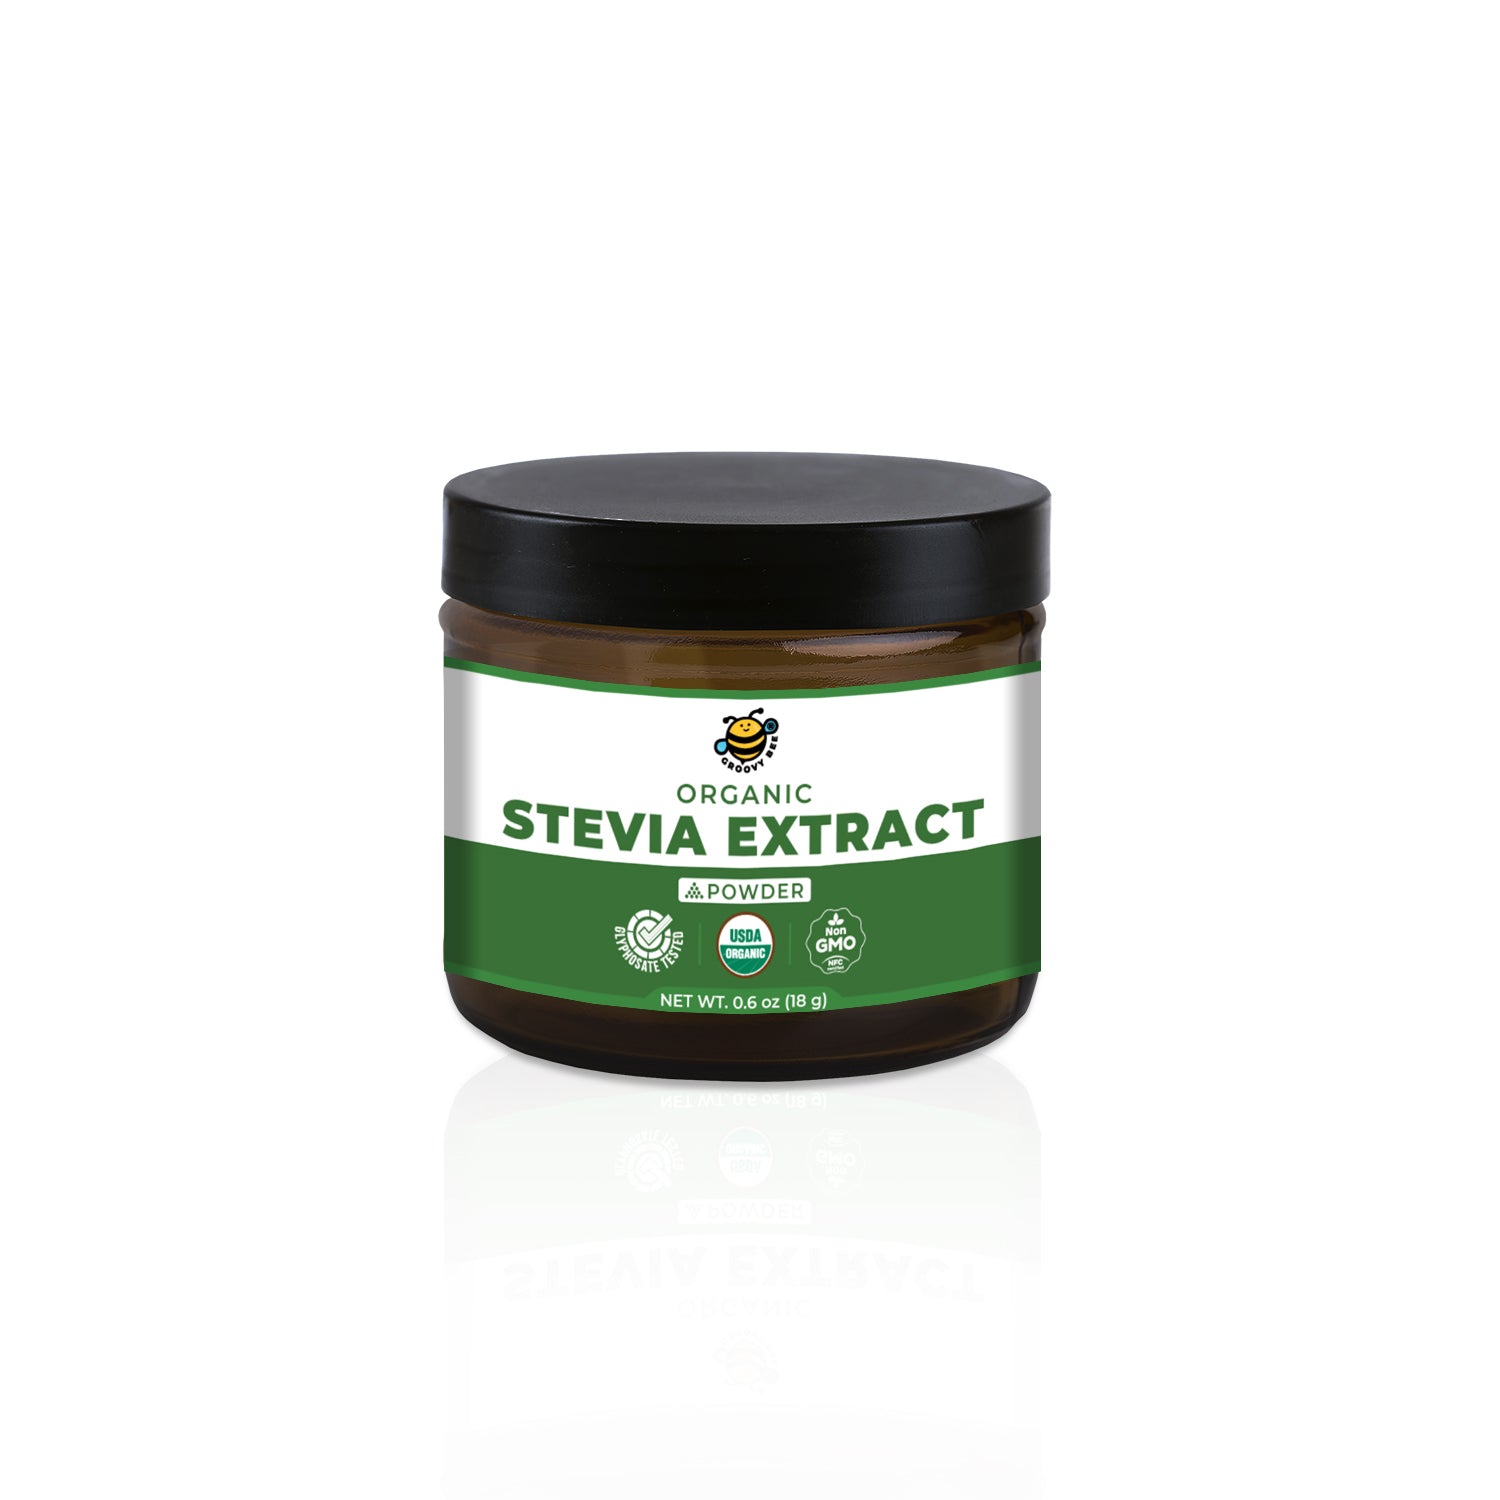 Organic Stevia Extract Powder 0.6oz (18g) (6-Pack)